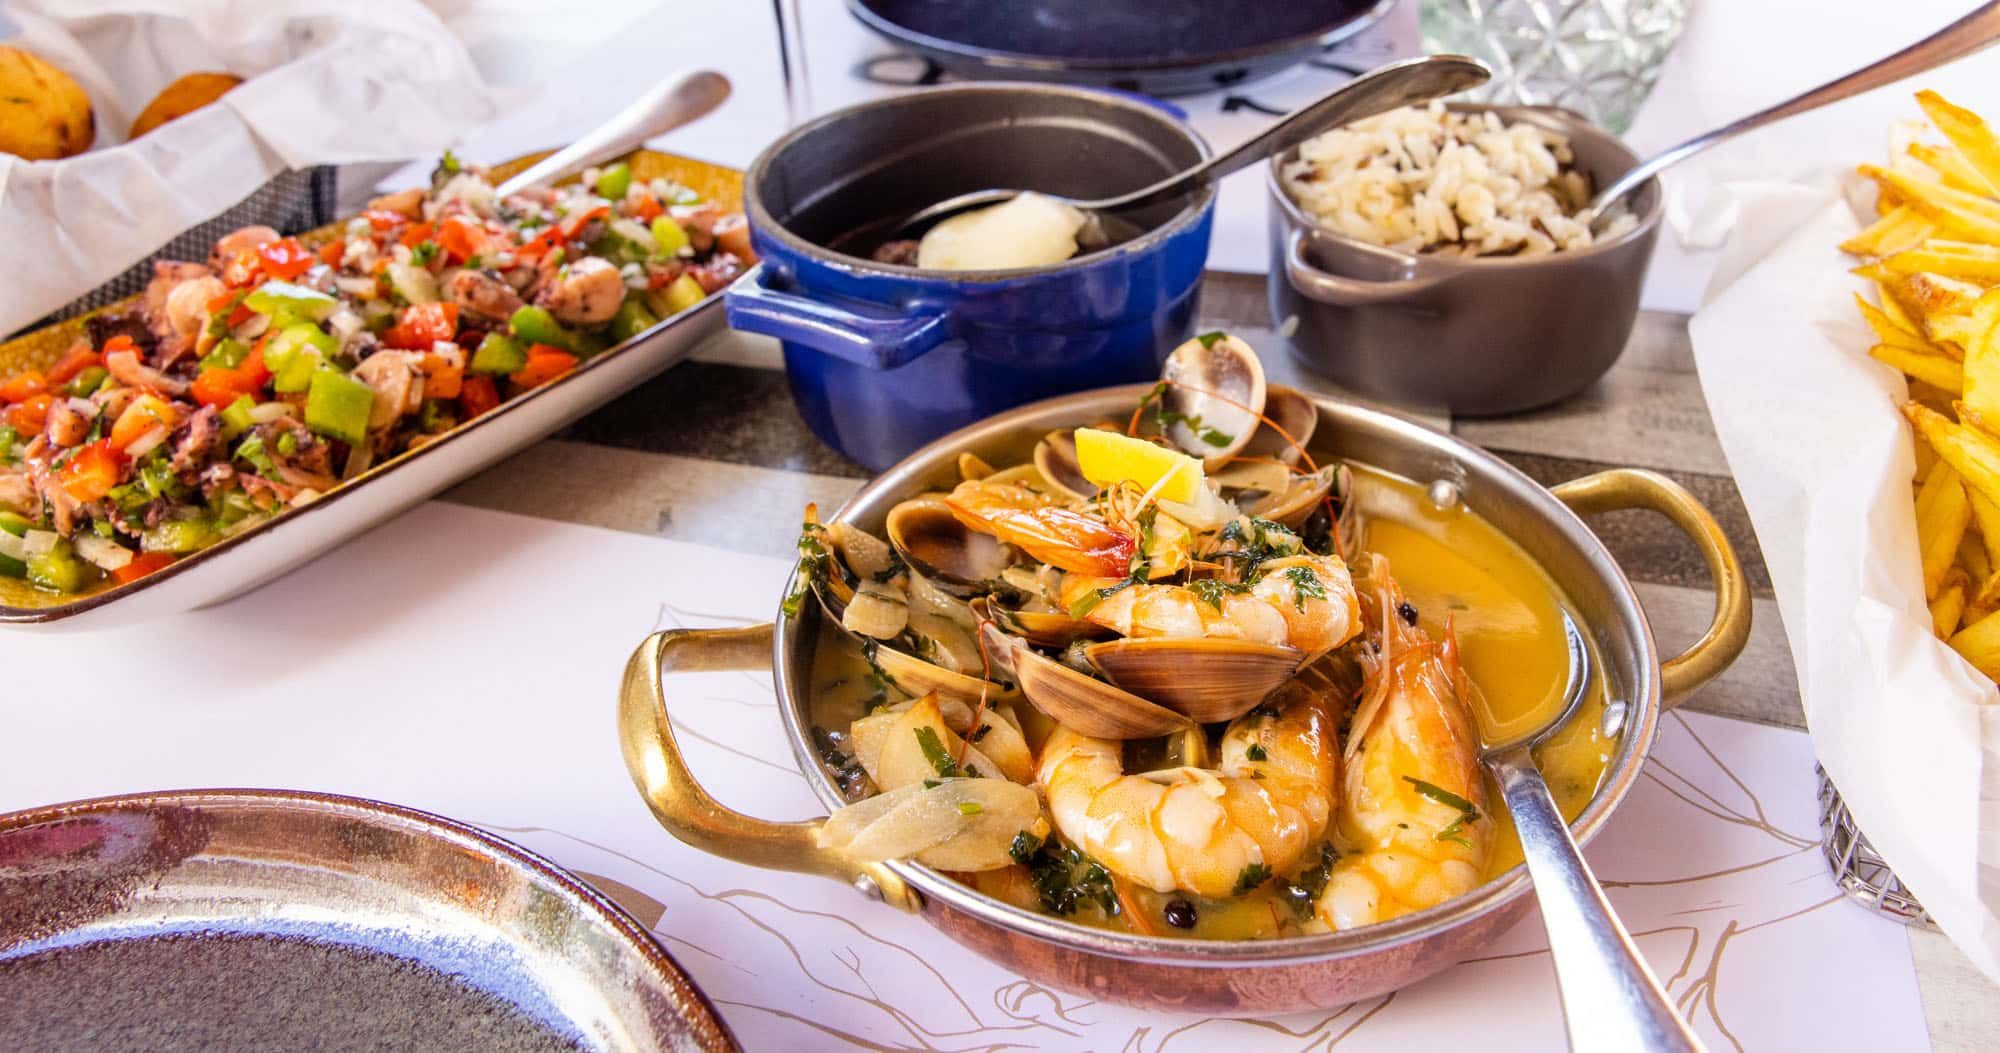 Featured image for “Best Albufeira Restaurants: Cheap Eats, Fine Dining, Tapas & Wine”